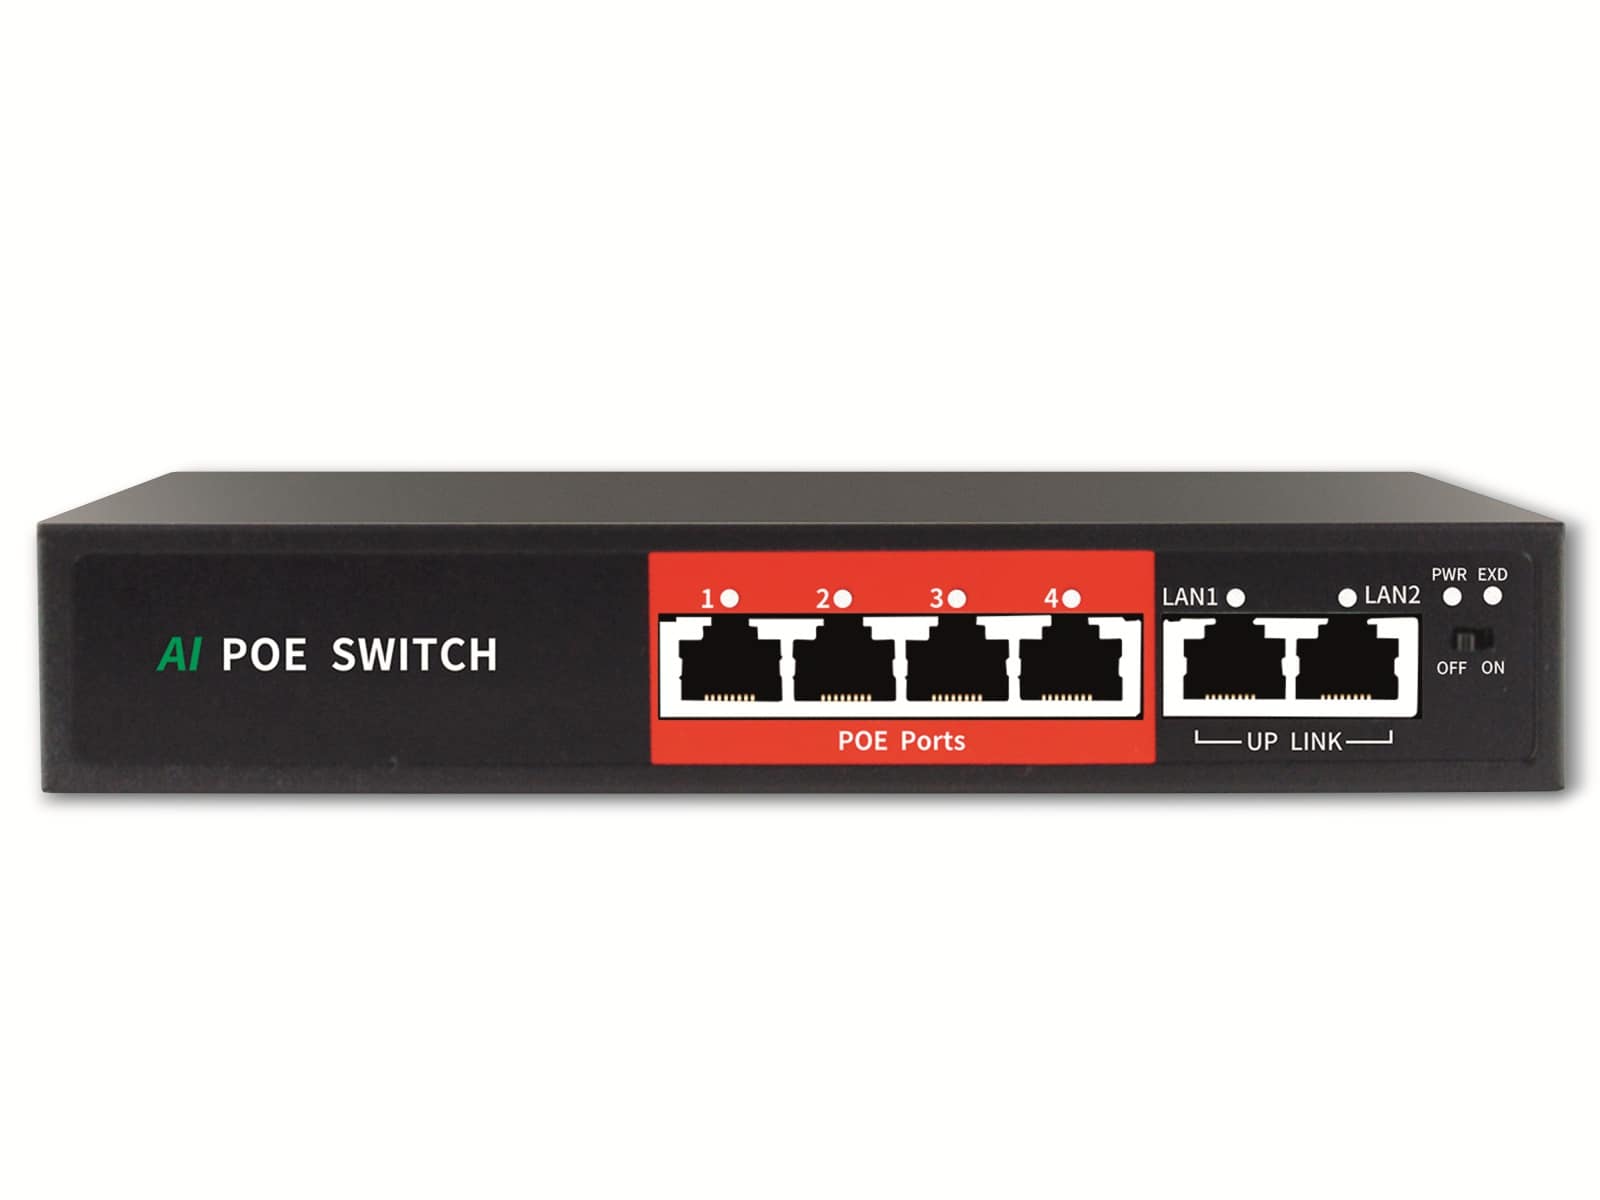 JOVISION PoE Netzwerk-Switch CloudSEE PS64, 4-port